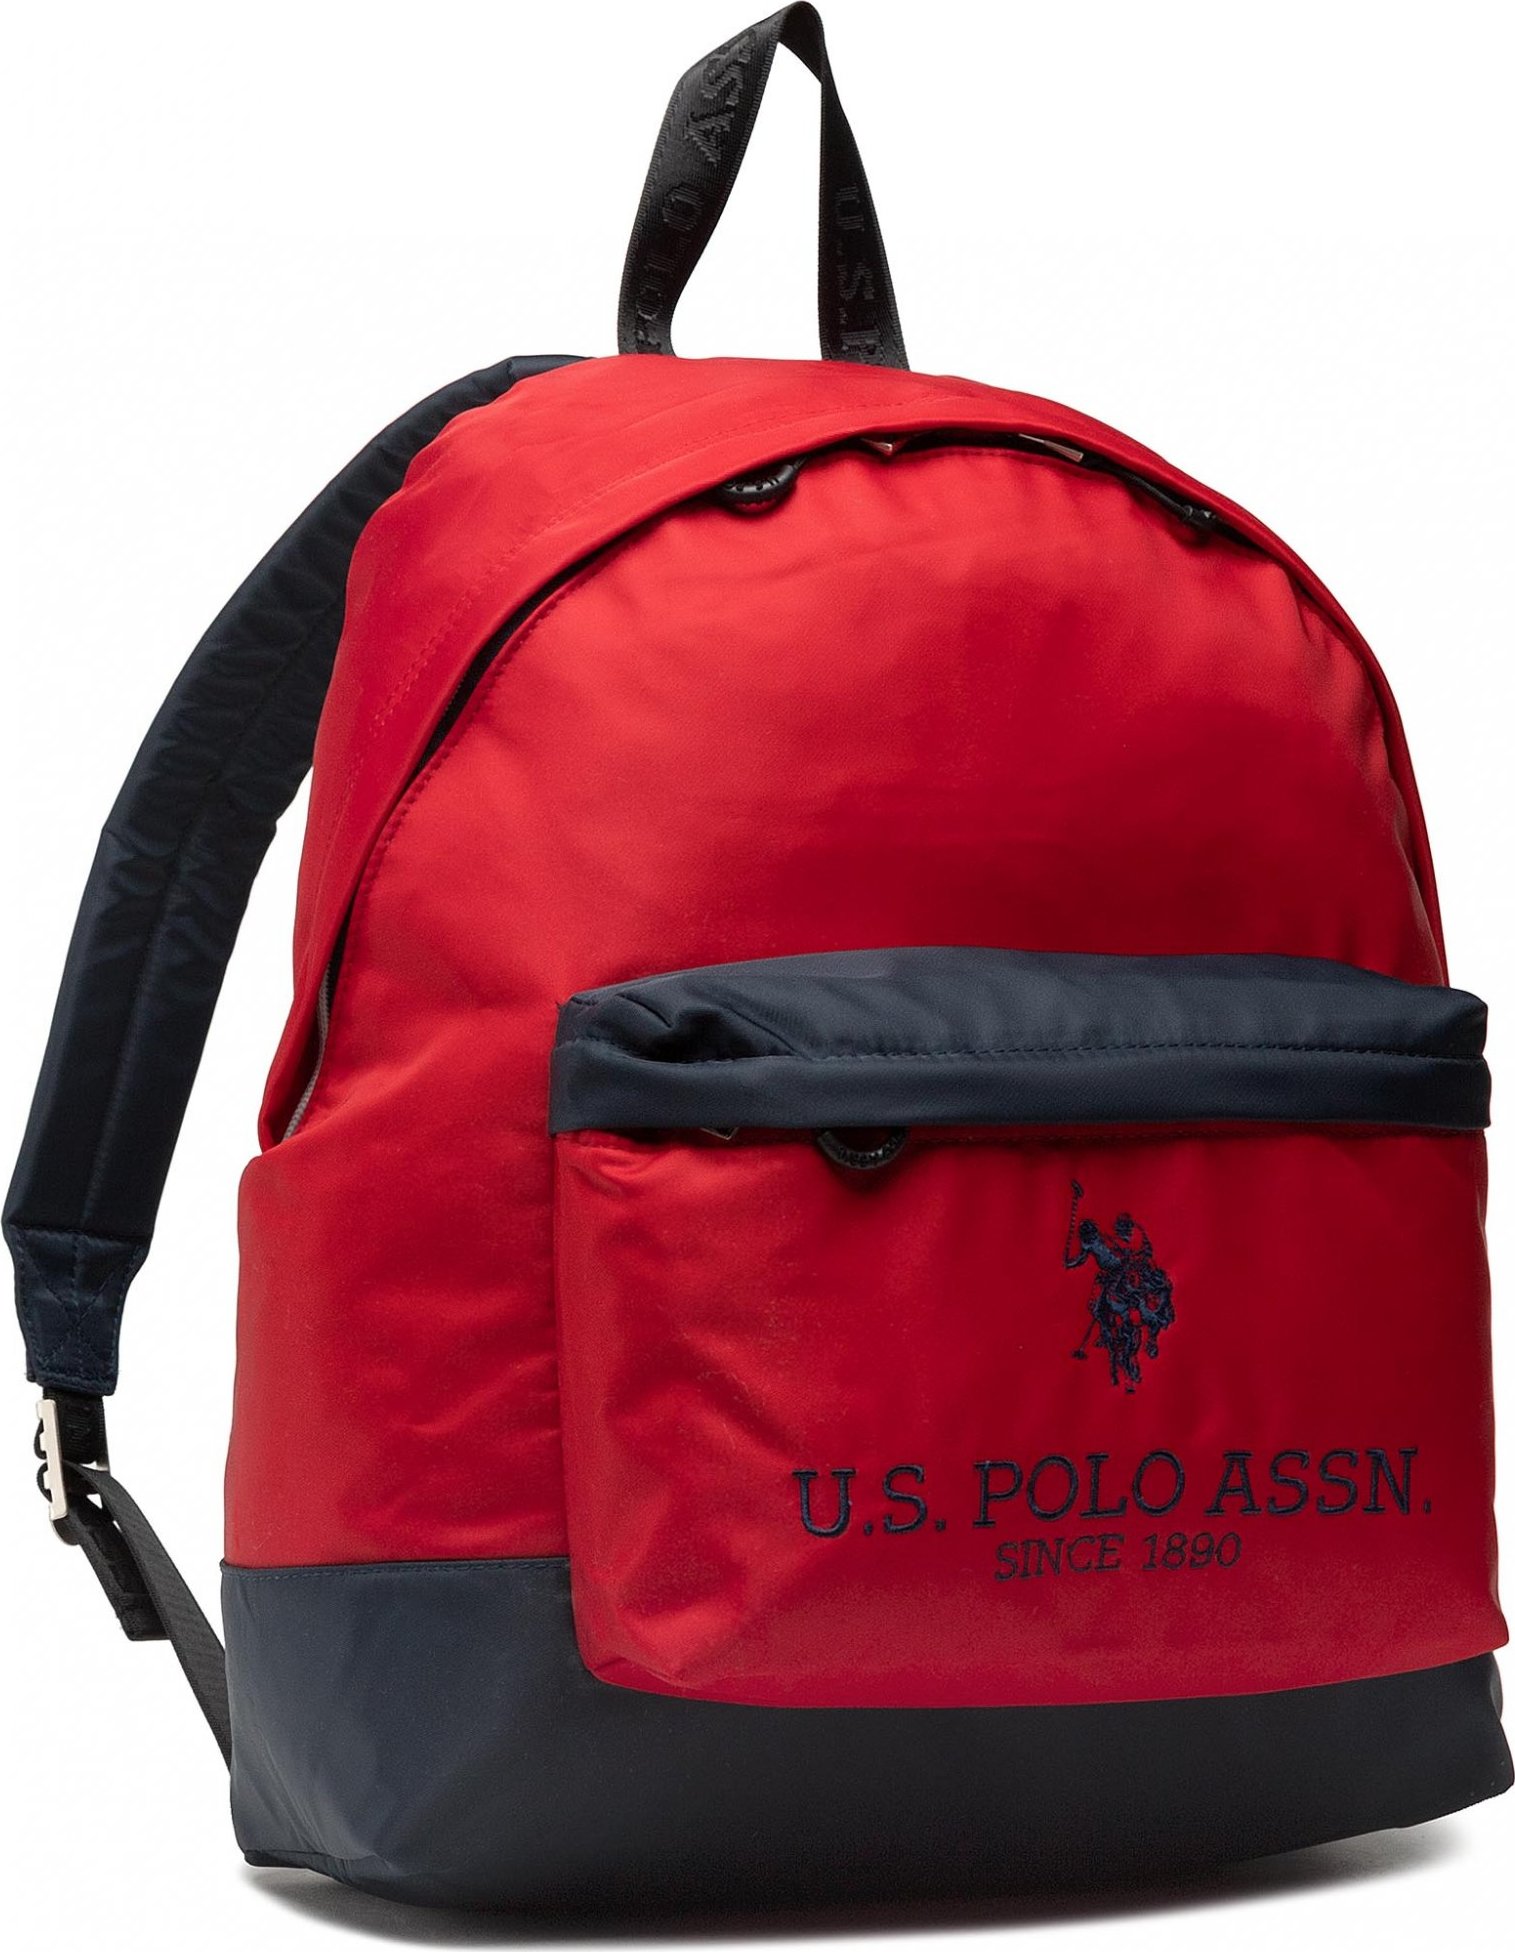 U.S. Polo Assn. New Bump Backpack Bag Nylon BIUNB4855MIA260